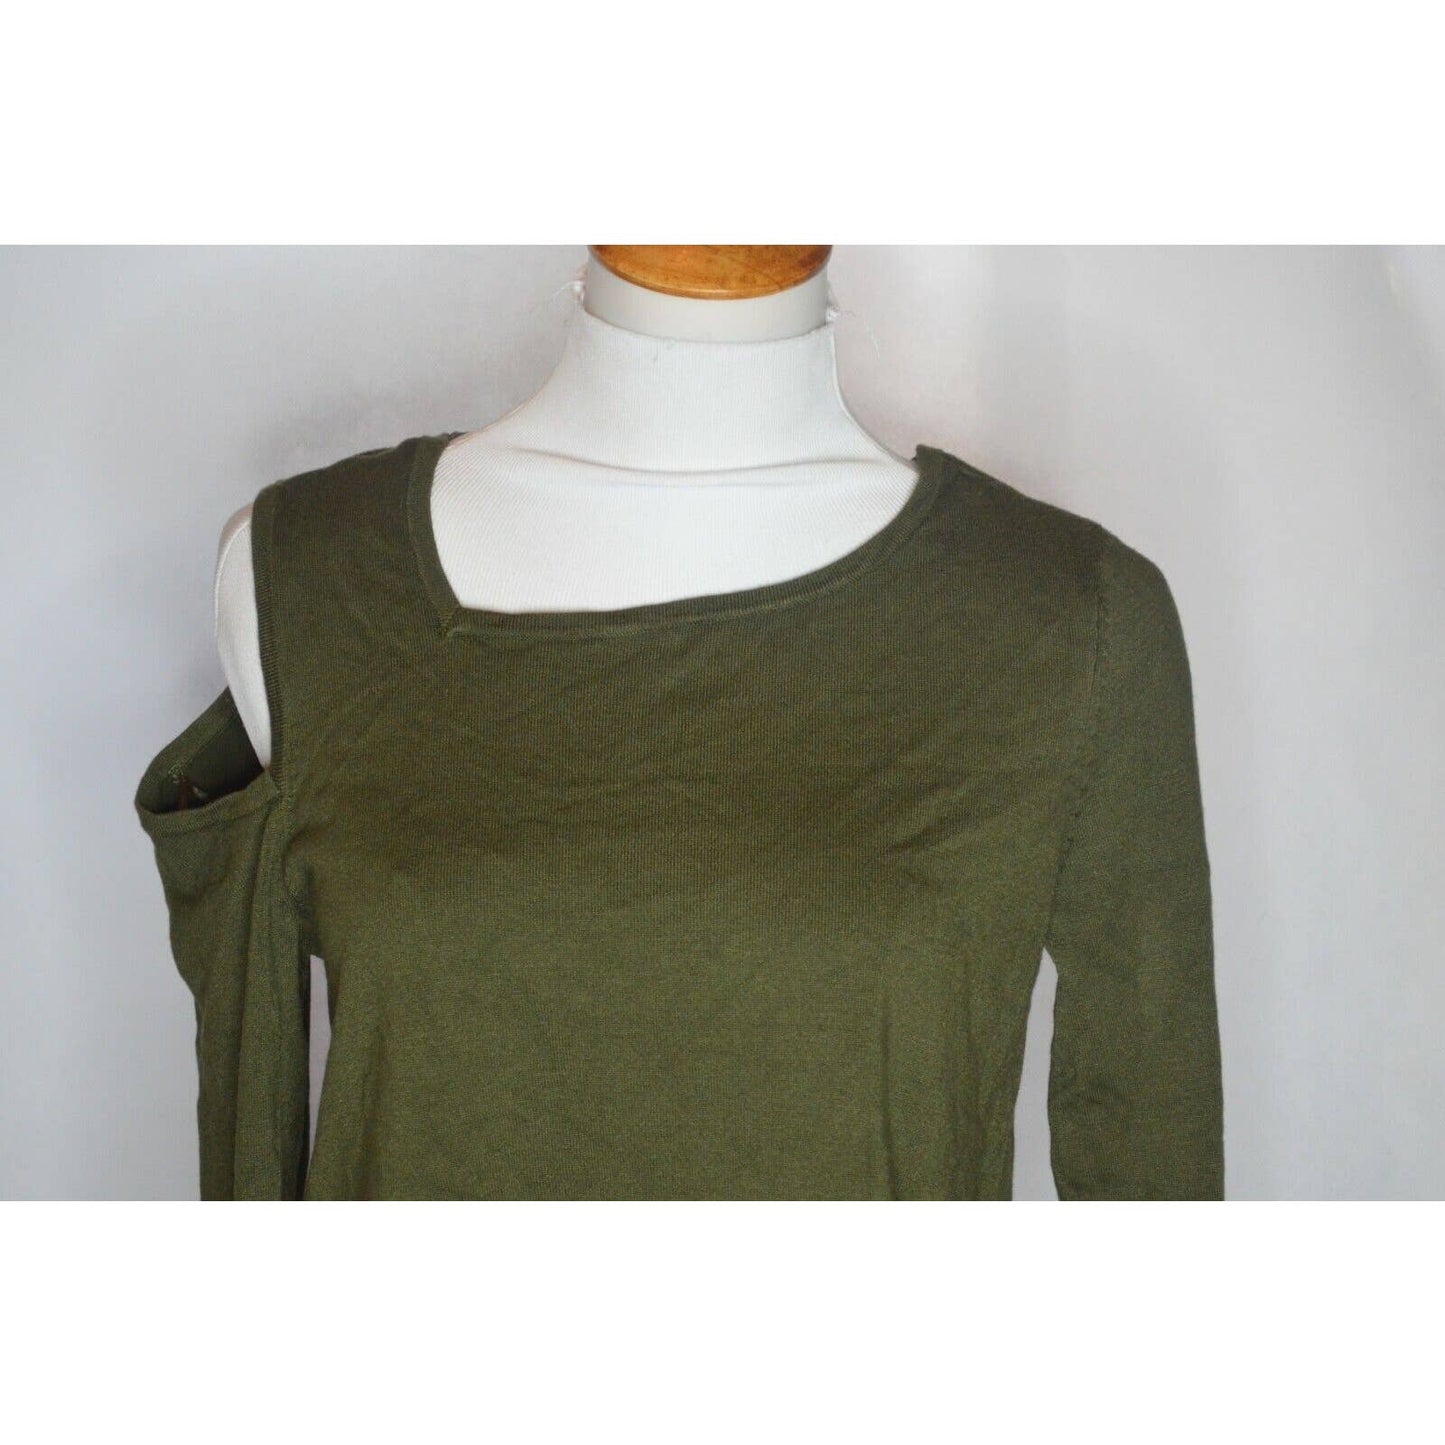 ALFANI, Ladies Autumn Blush Moss Green Sweater, Cold Shoulder, Size Small, NWT